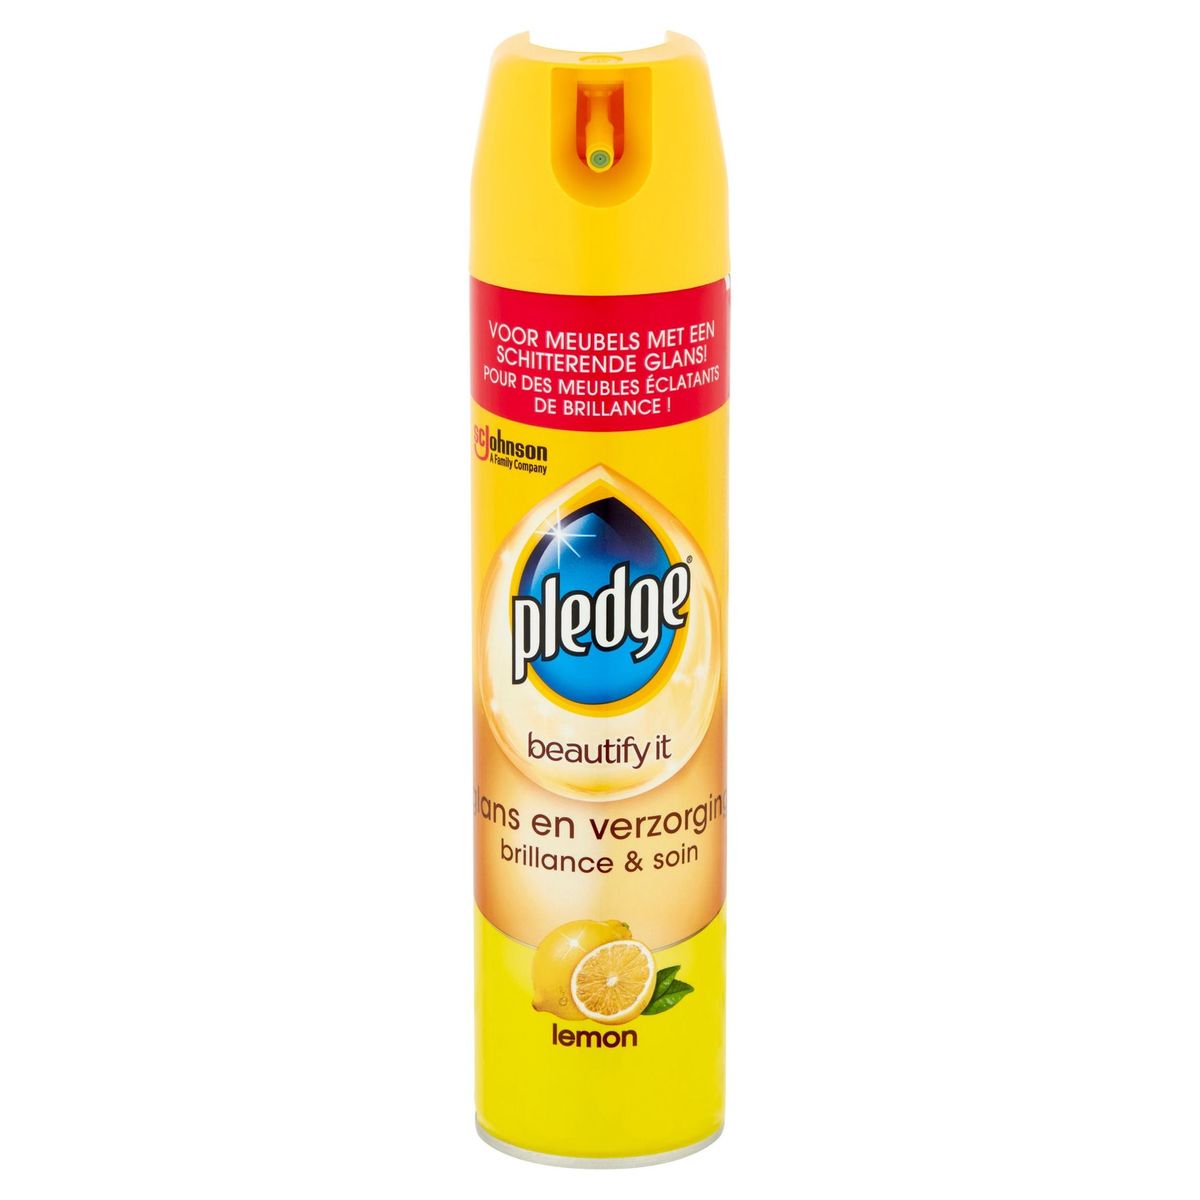 Pledge®-Beautify It- Brillance & Soin- Lemon- 300 ml